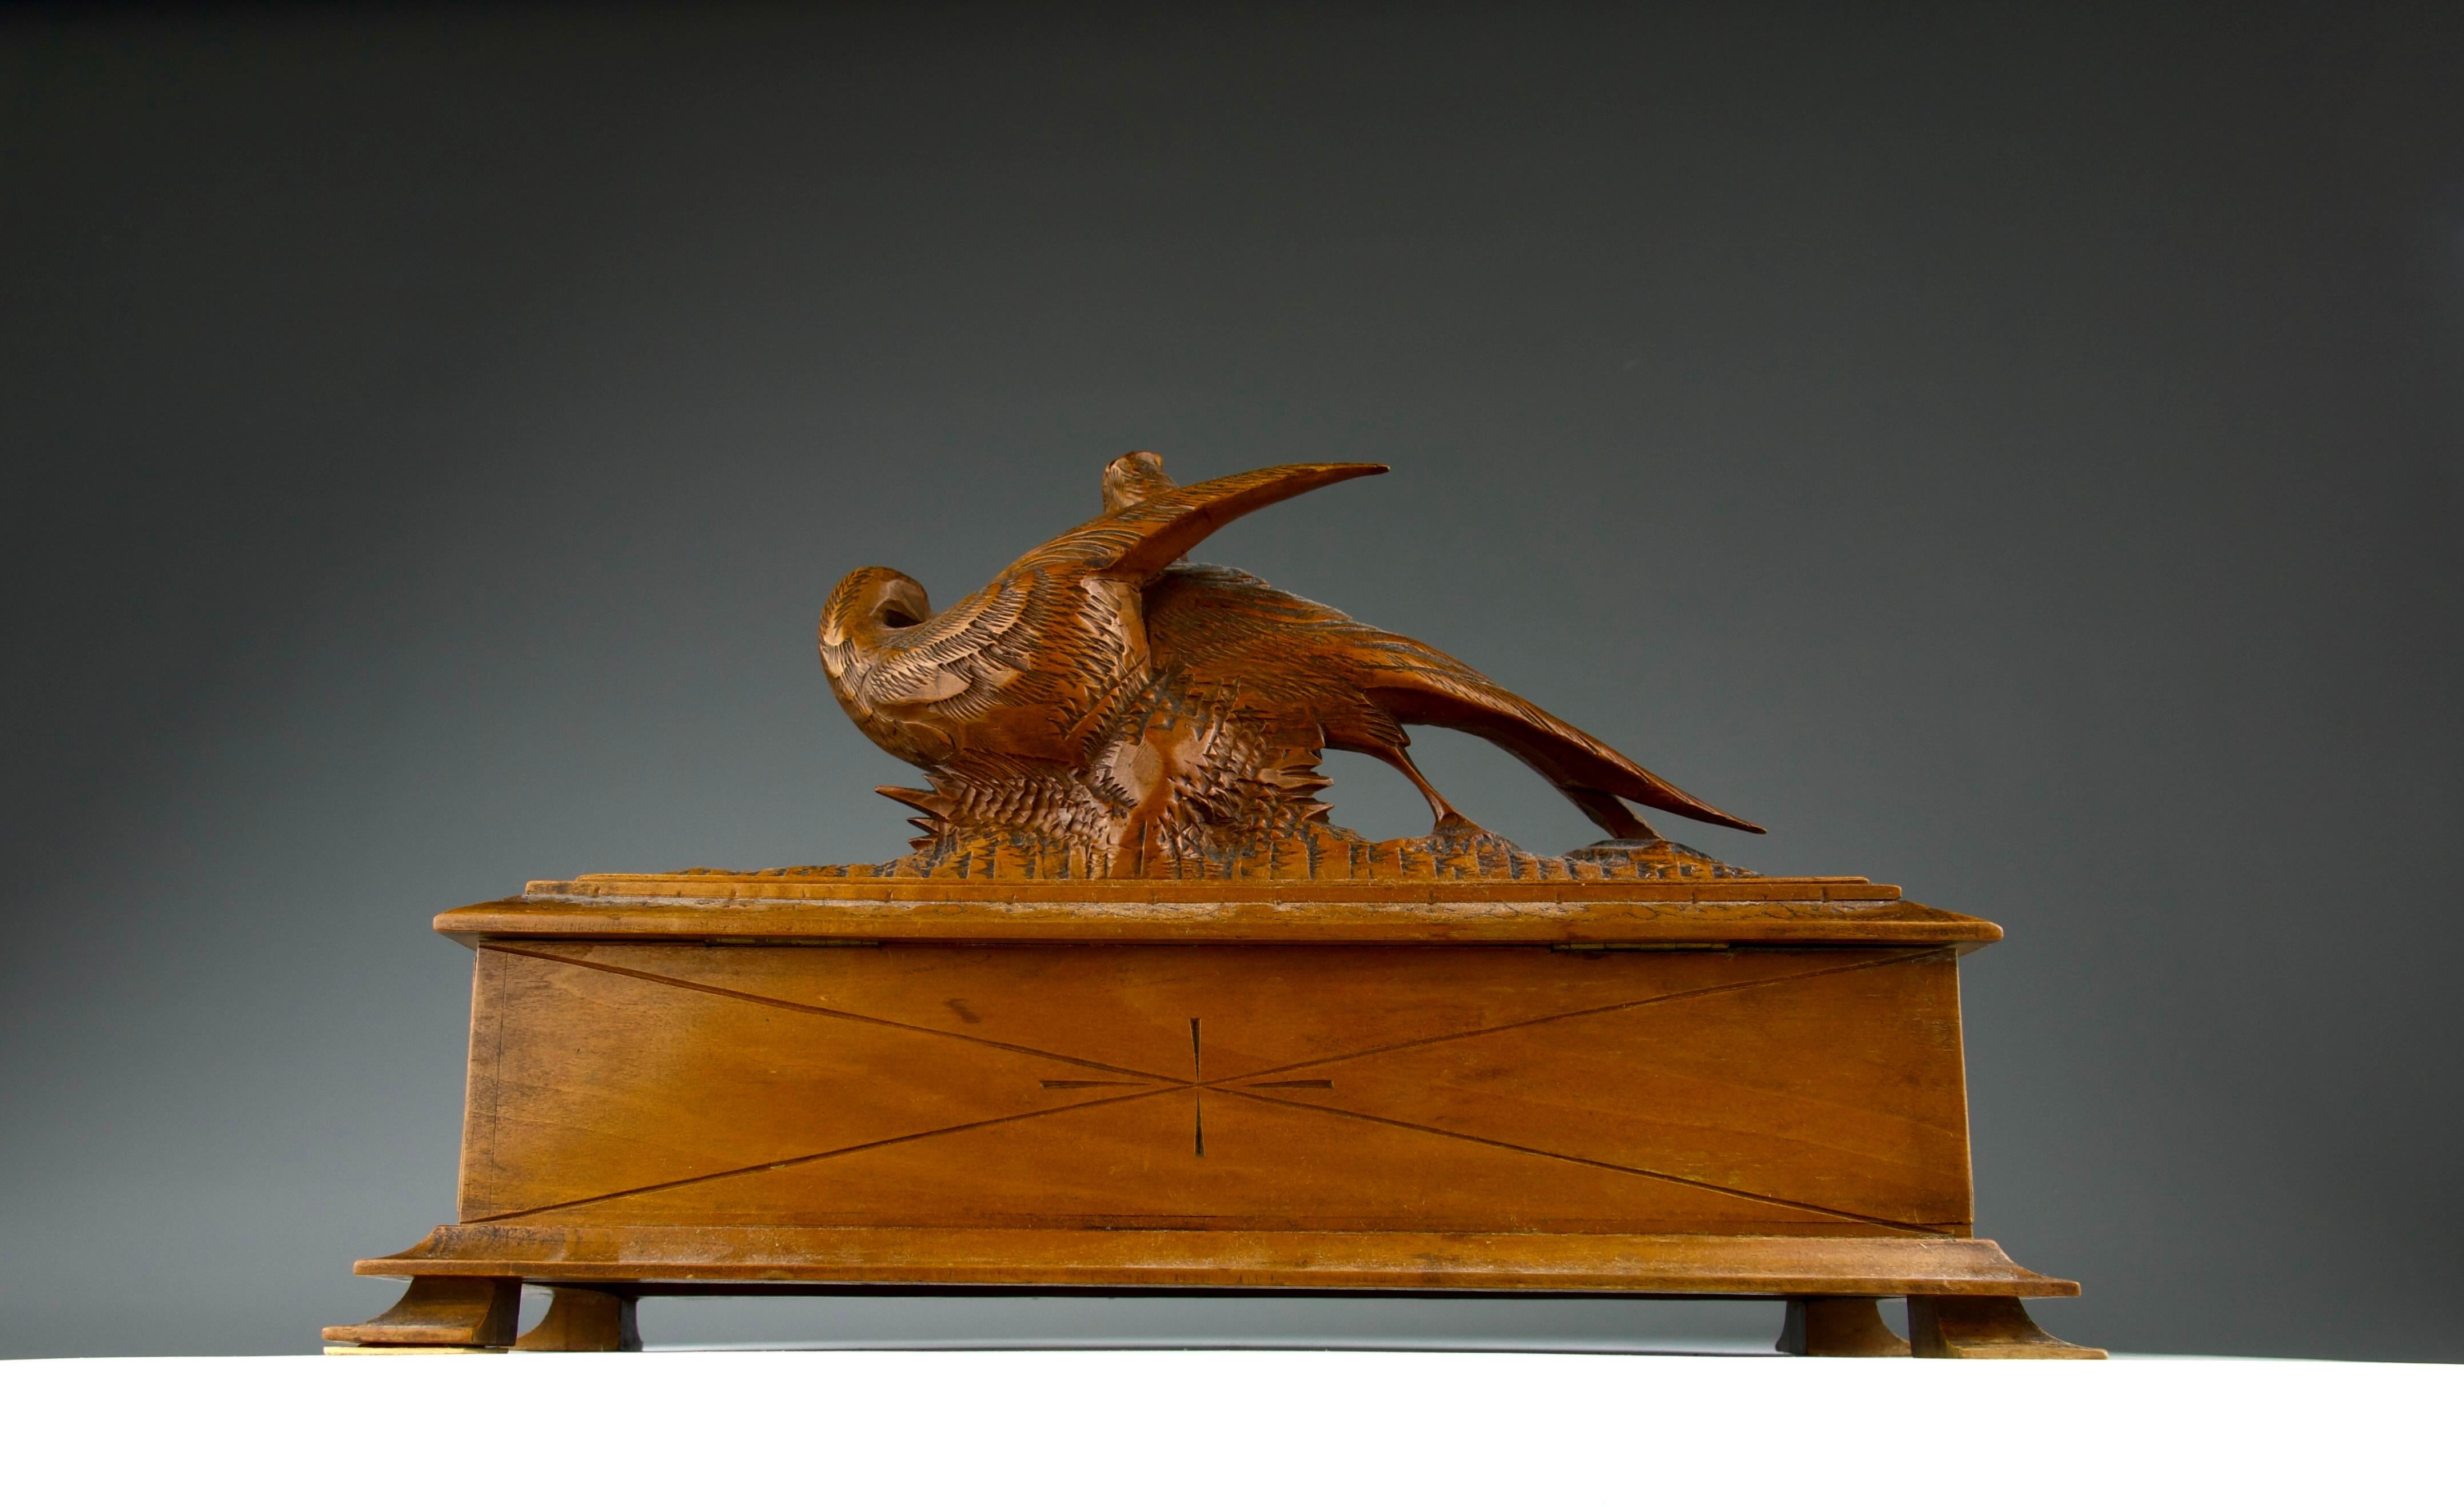 Wood Brienz Artisans, Pheasant Box, Late 19th Century Switzerland